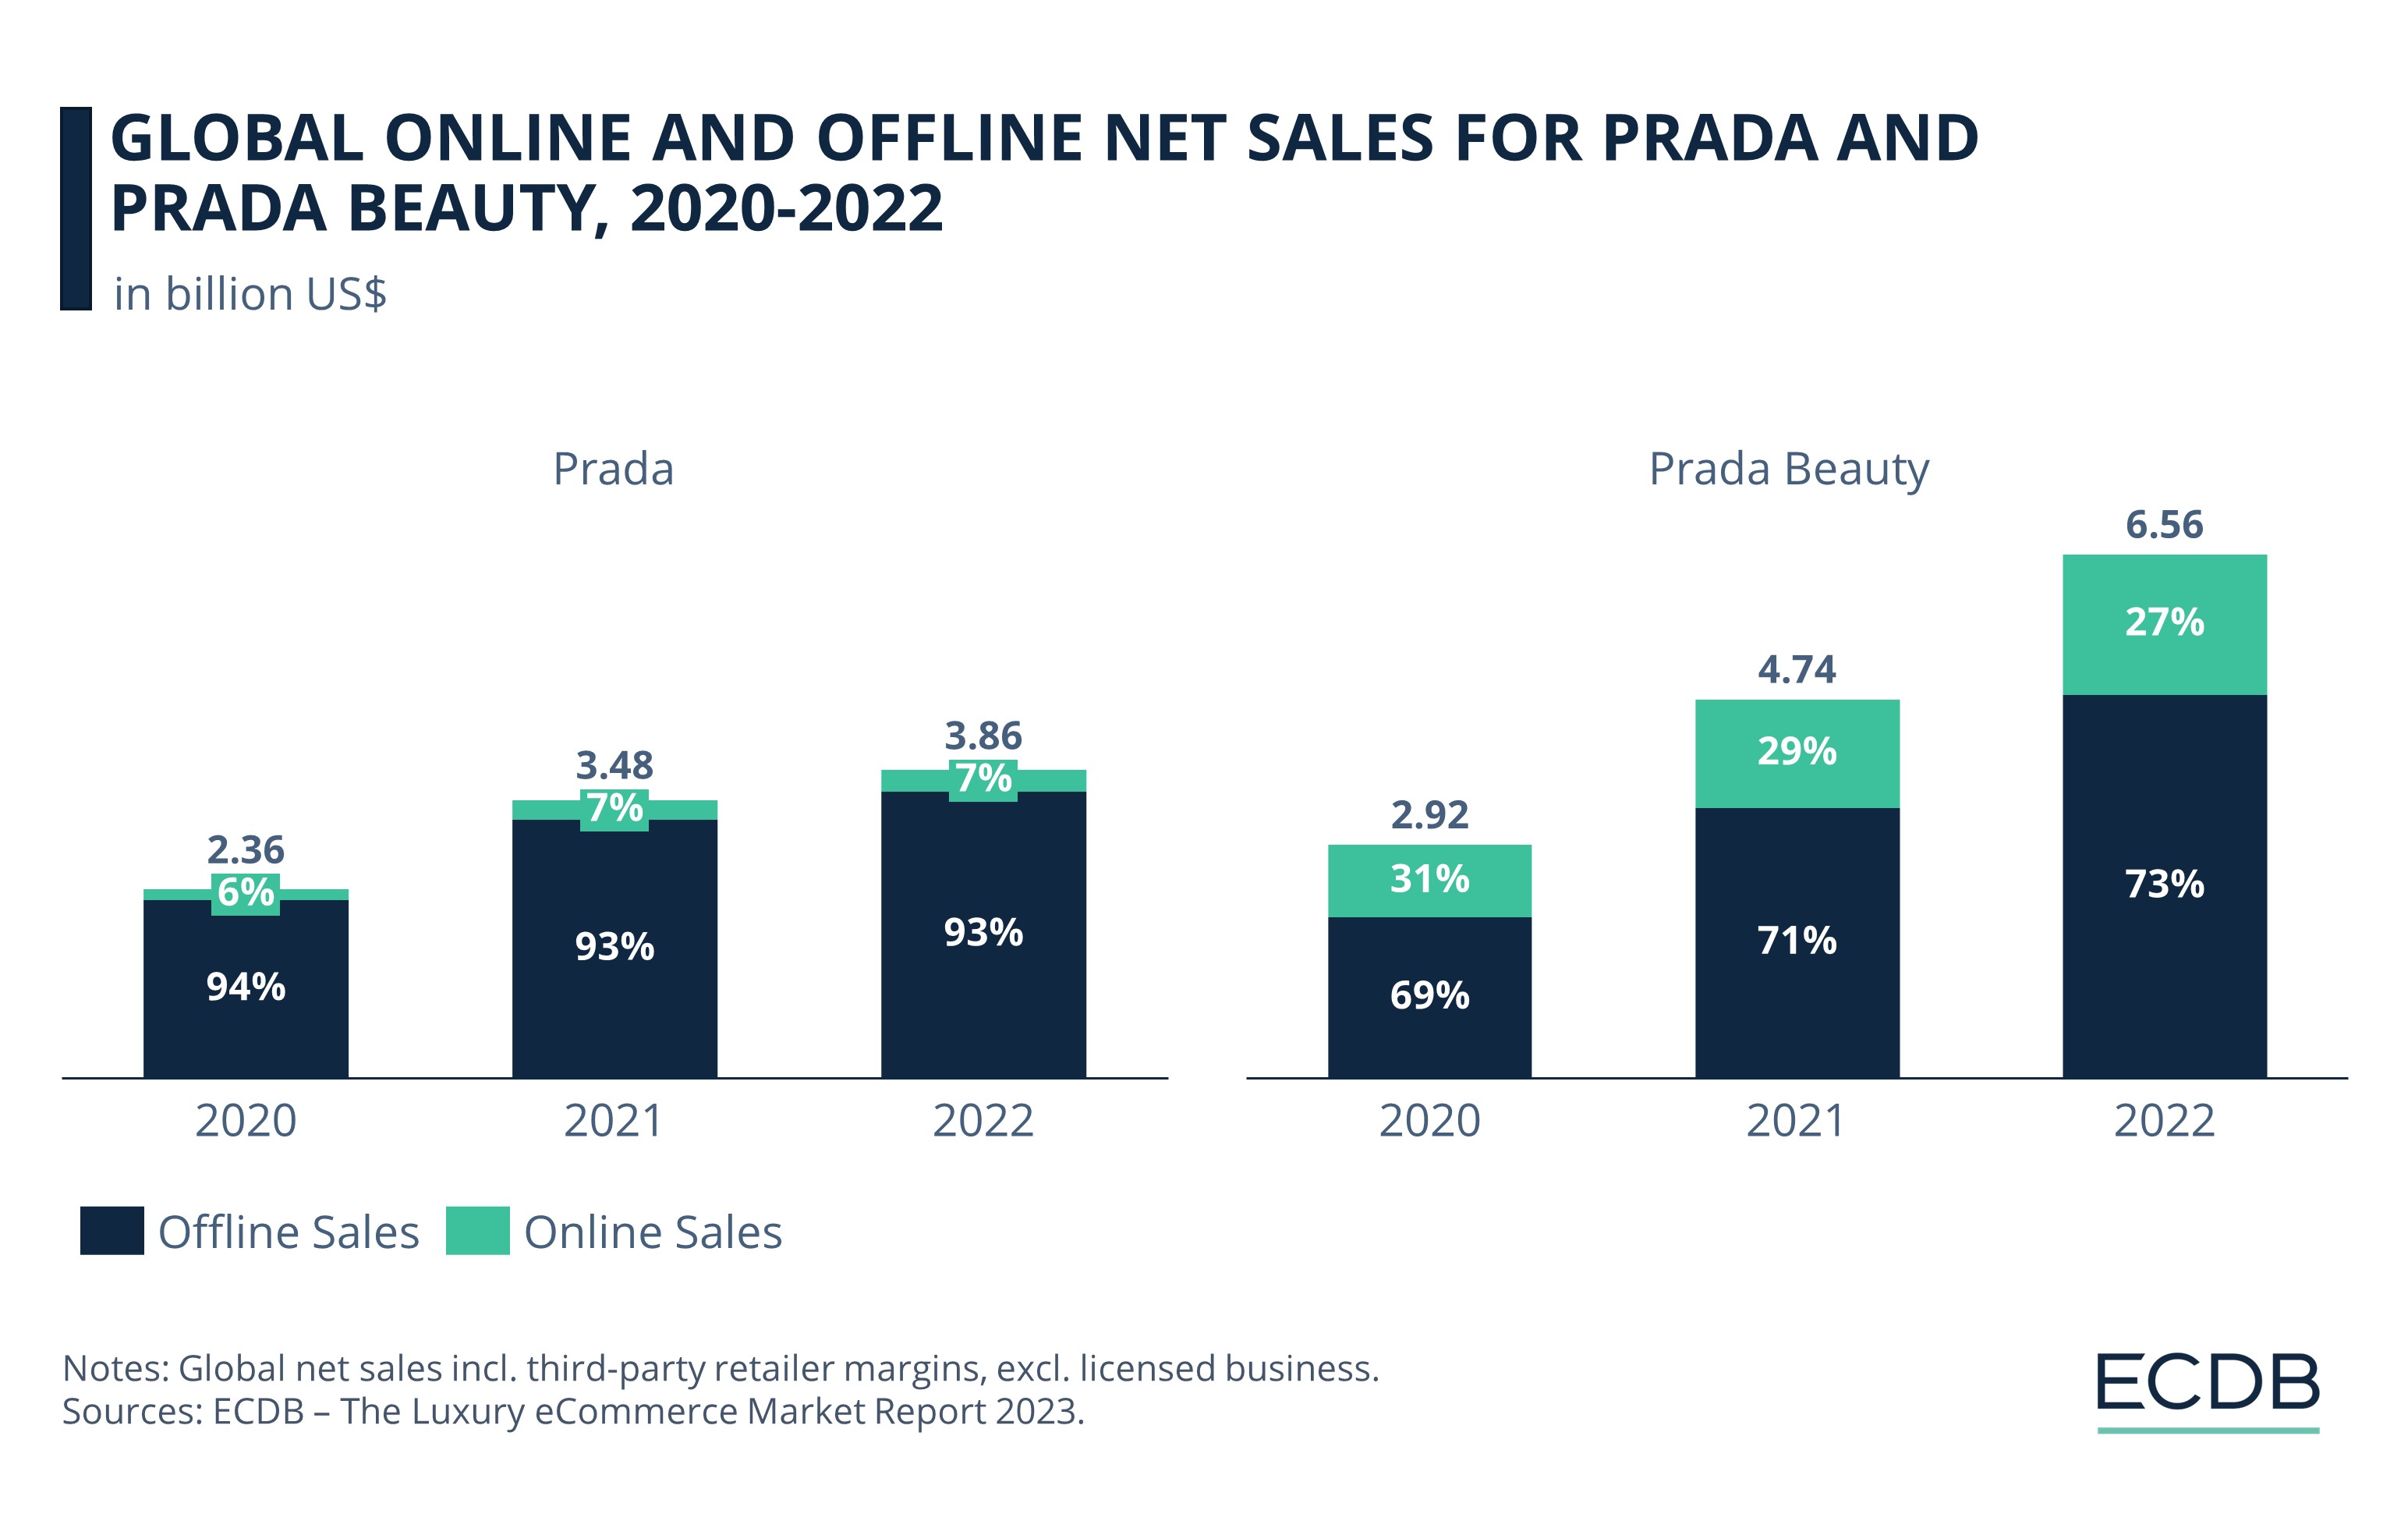 Global Online and Offline Net Sales for Prada and Prada Beauty, 2020-2022